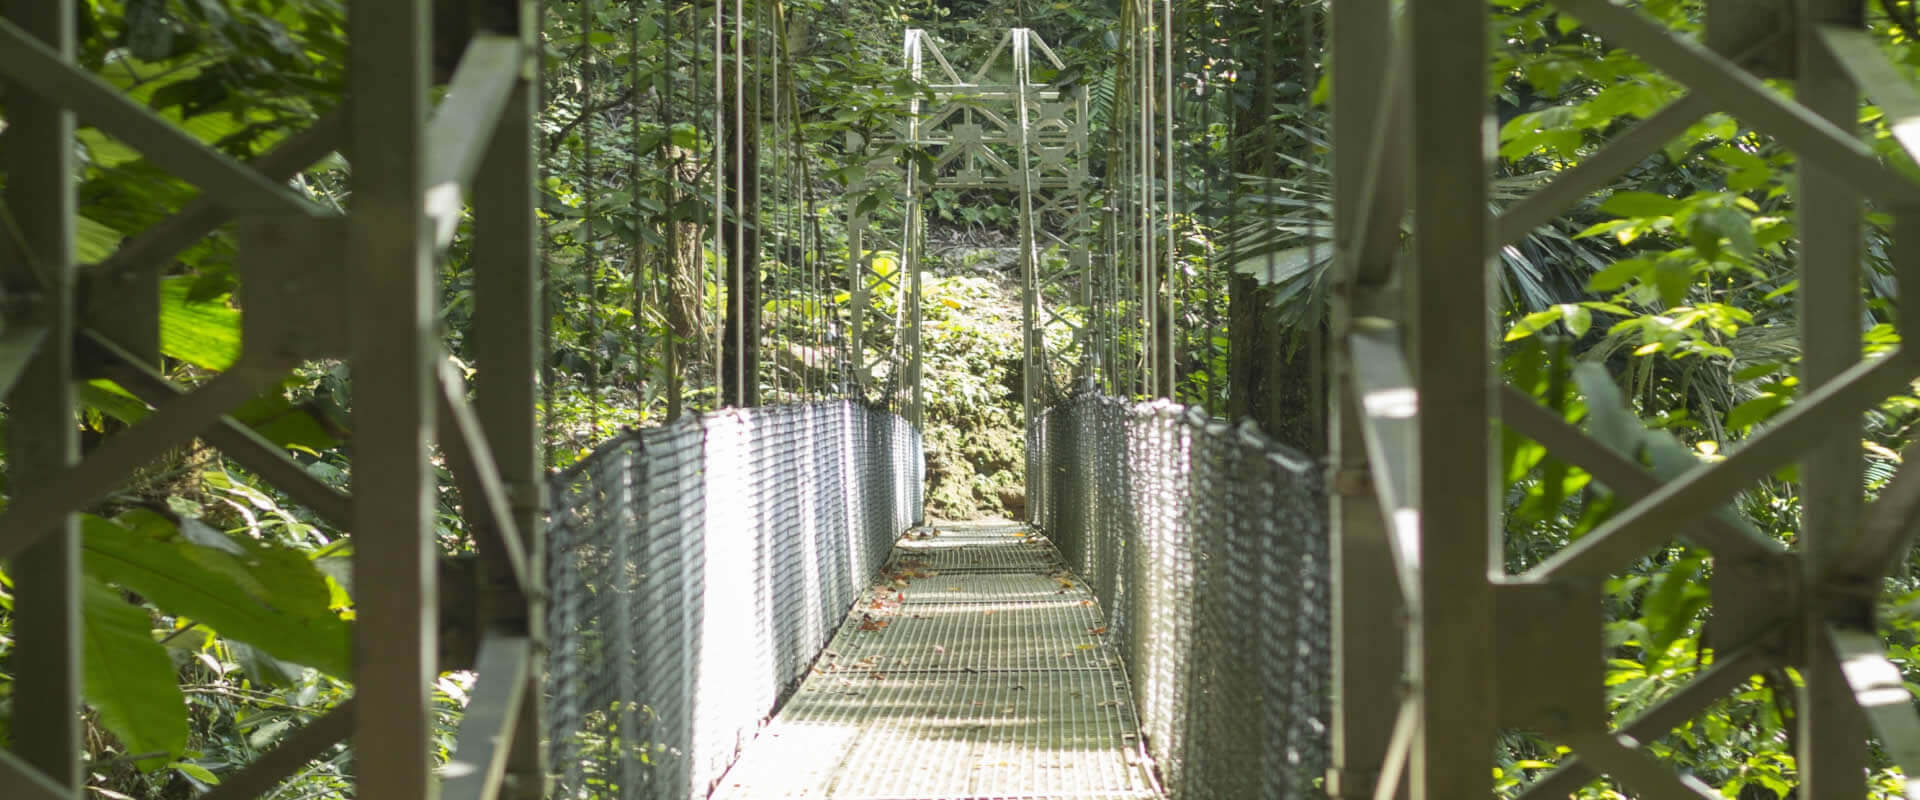 Hanging Bridges, La Fortuna, Costa Rica